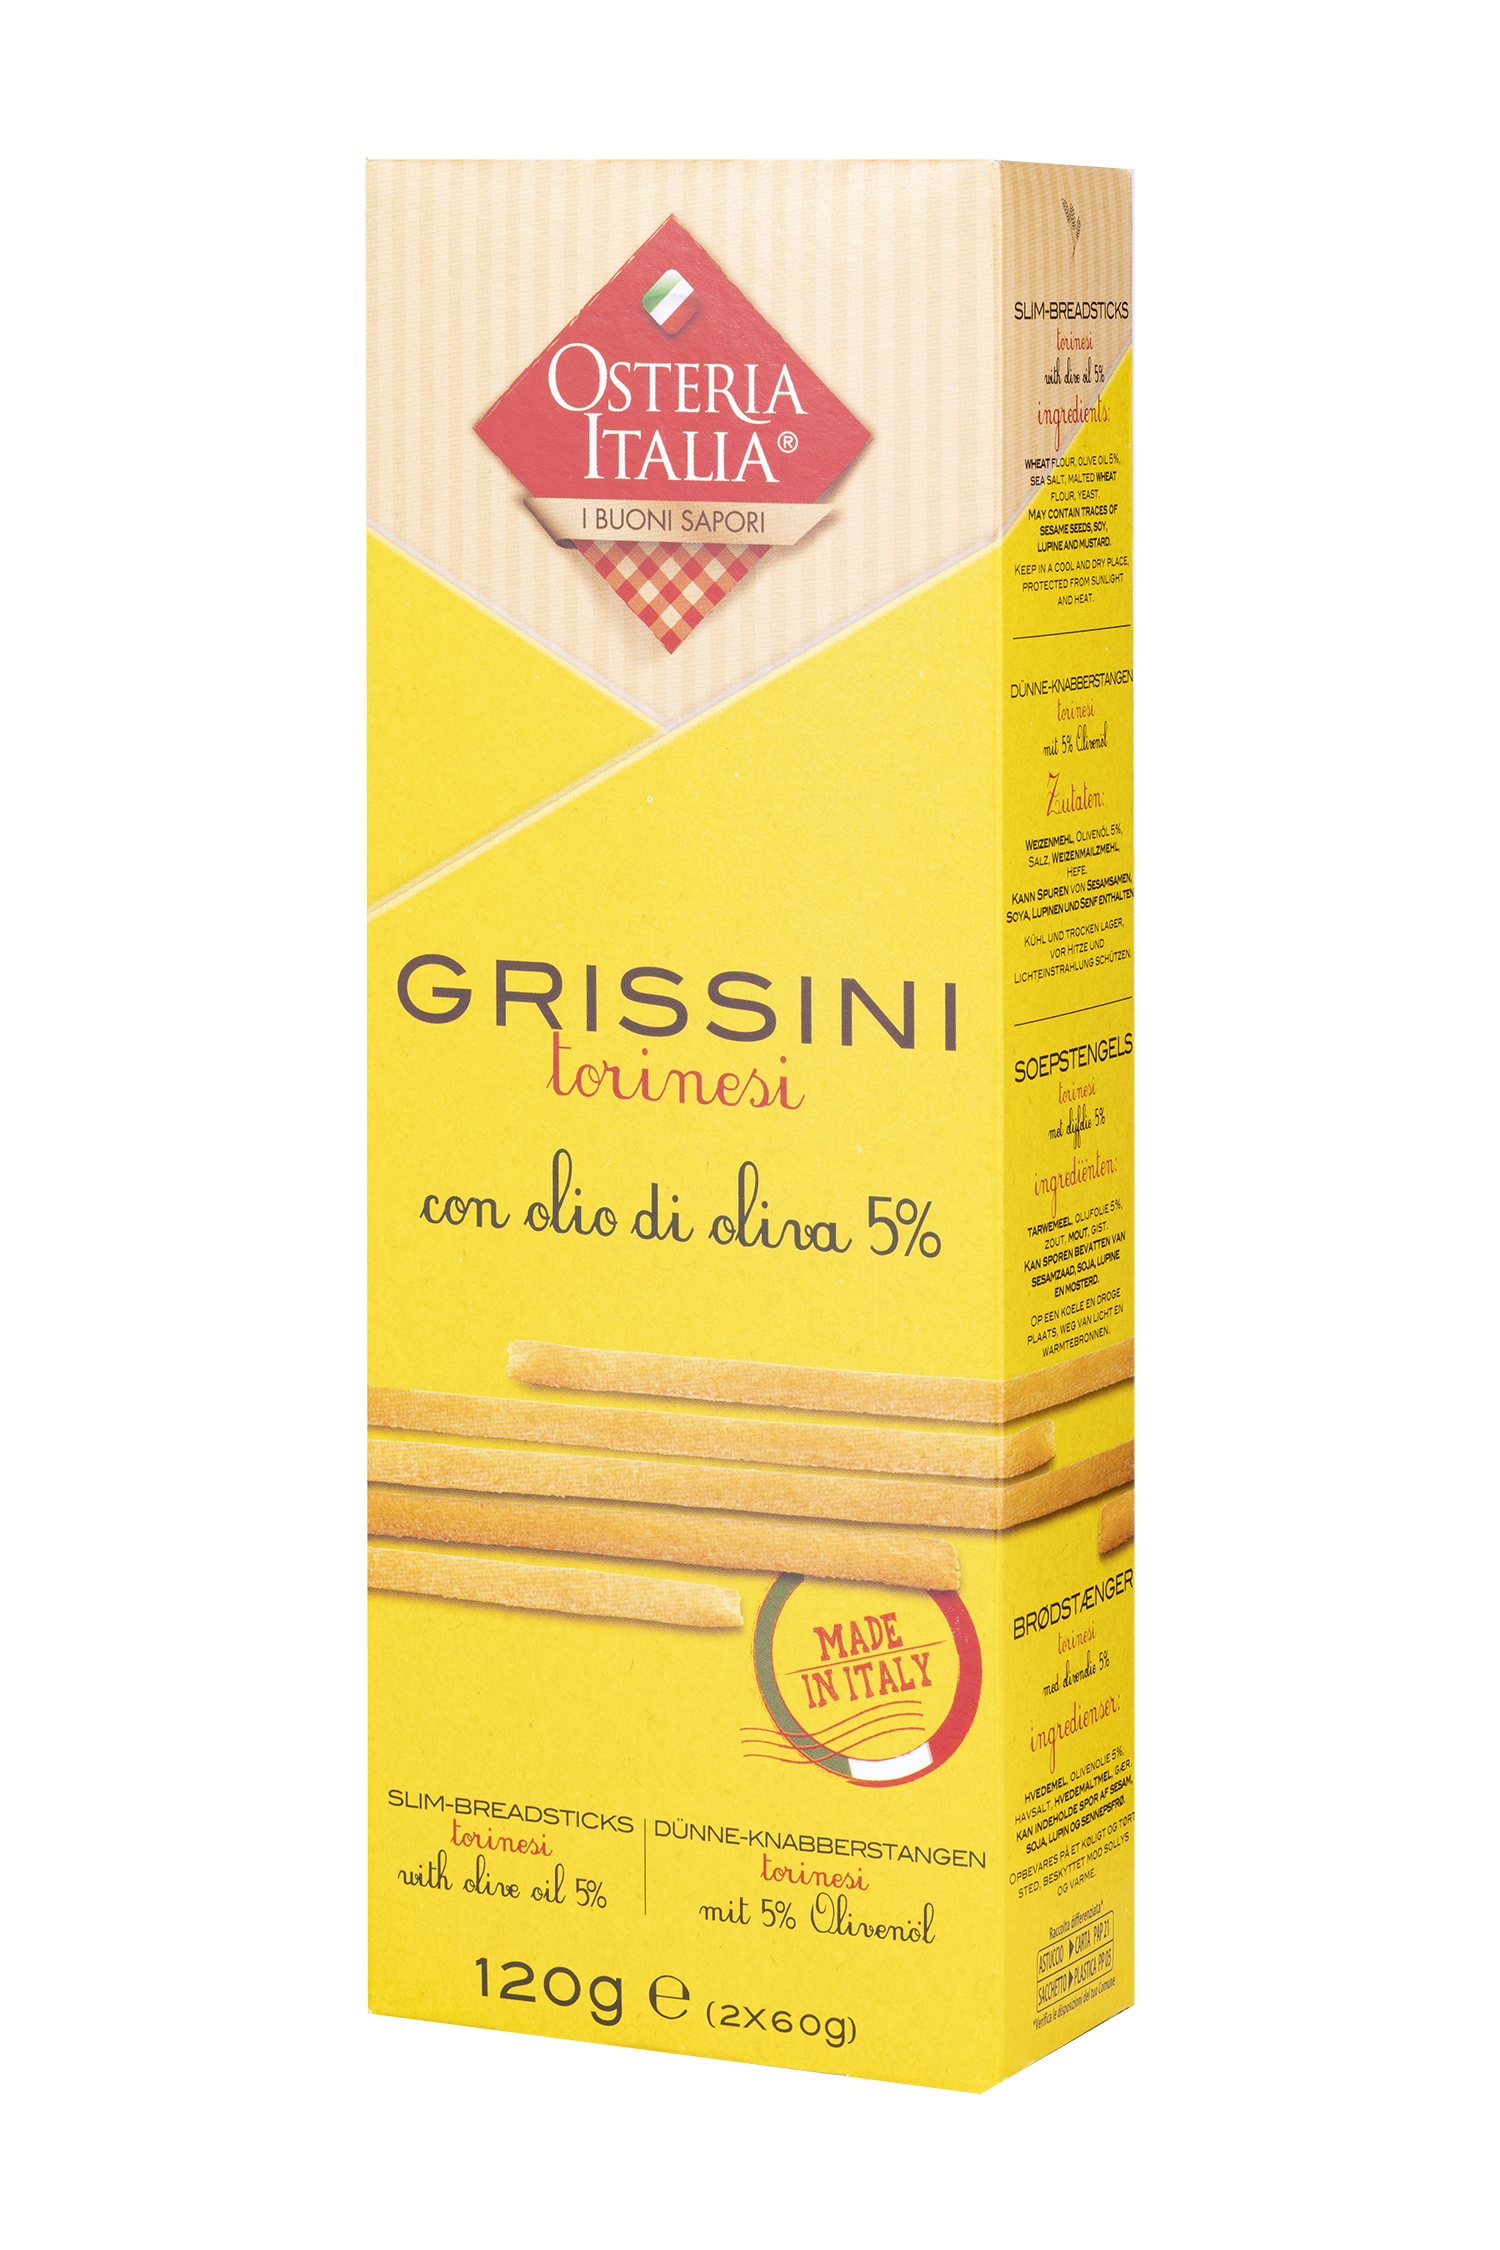 Grissini mit 5% Olivenöl - Osteria Italiana